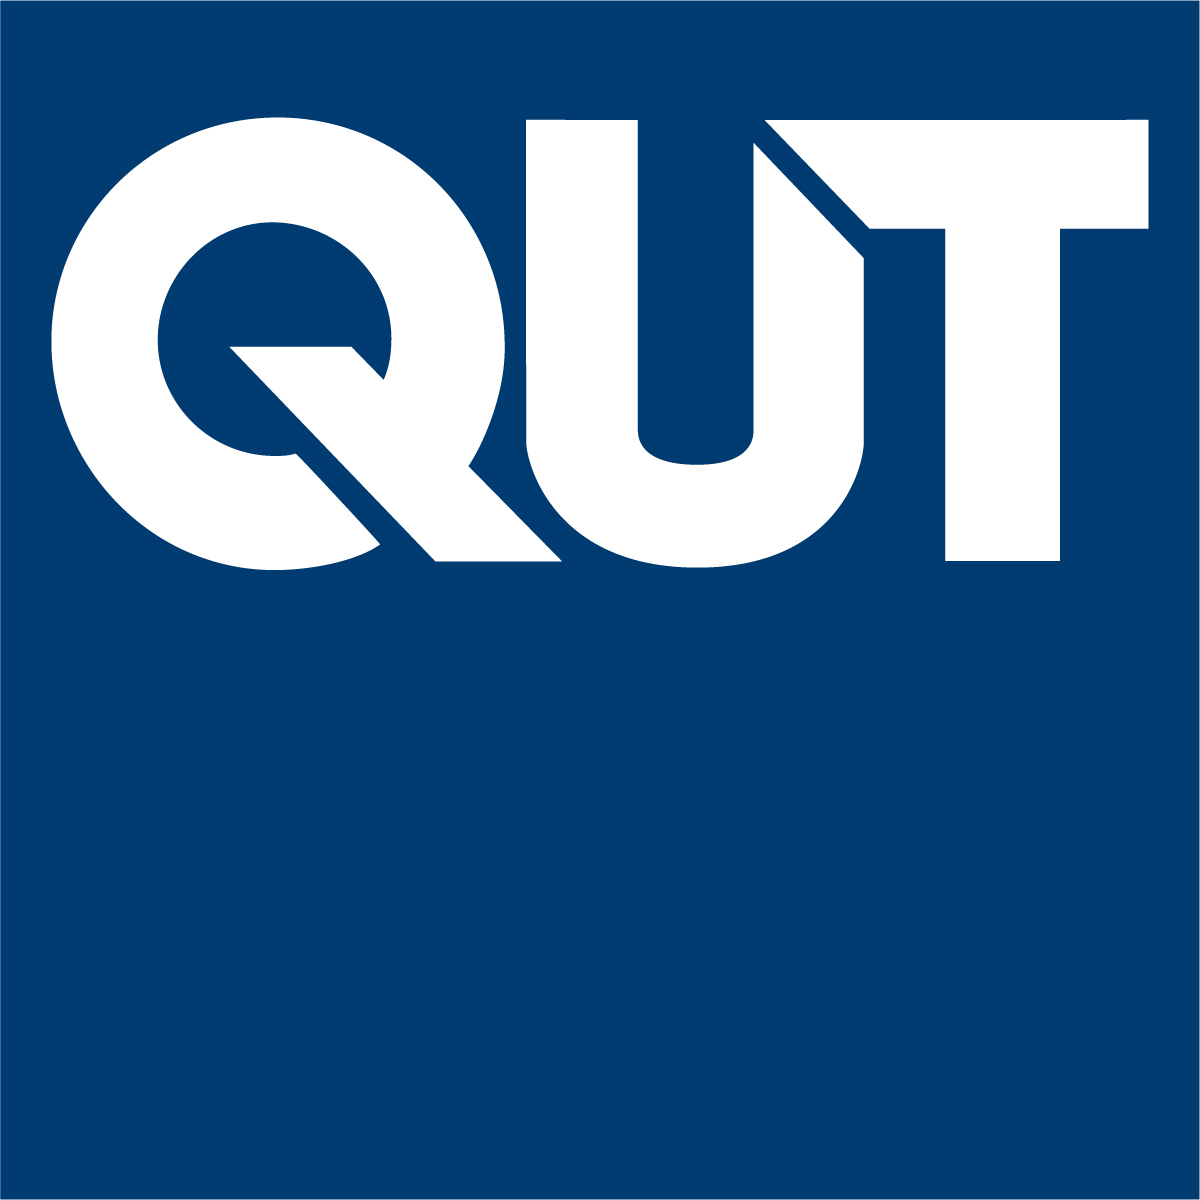 queensland university of technology logo